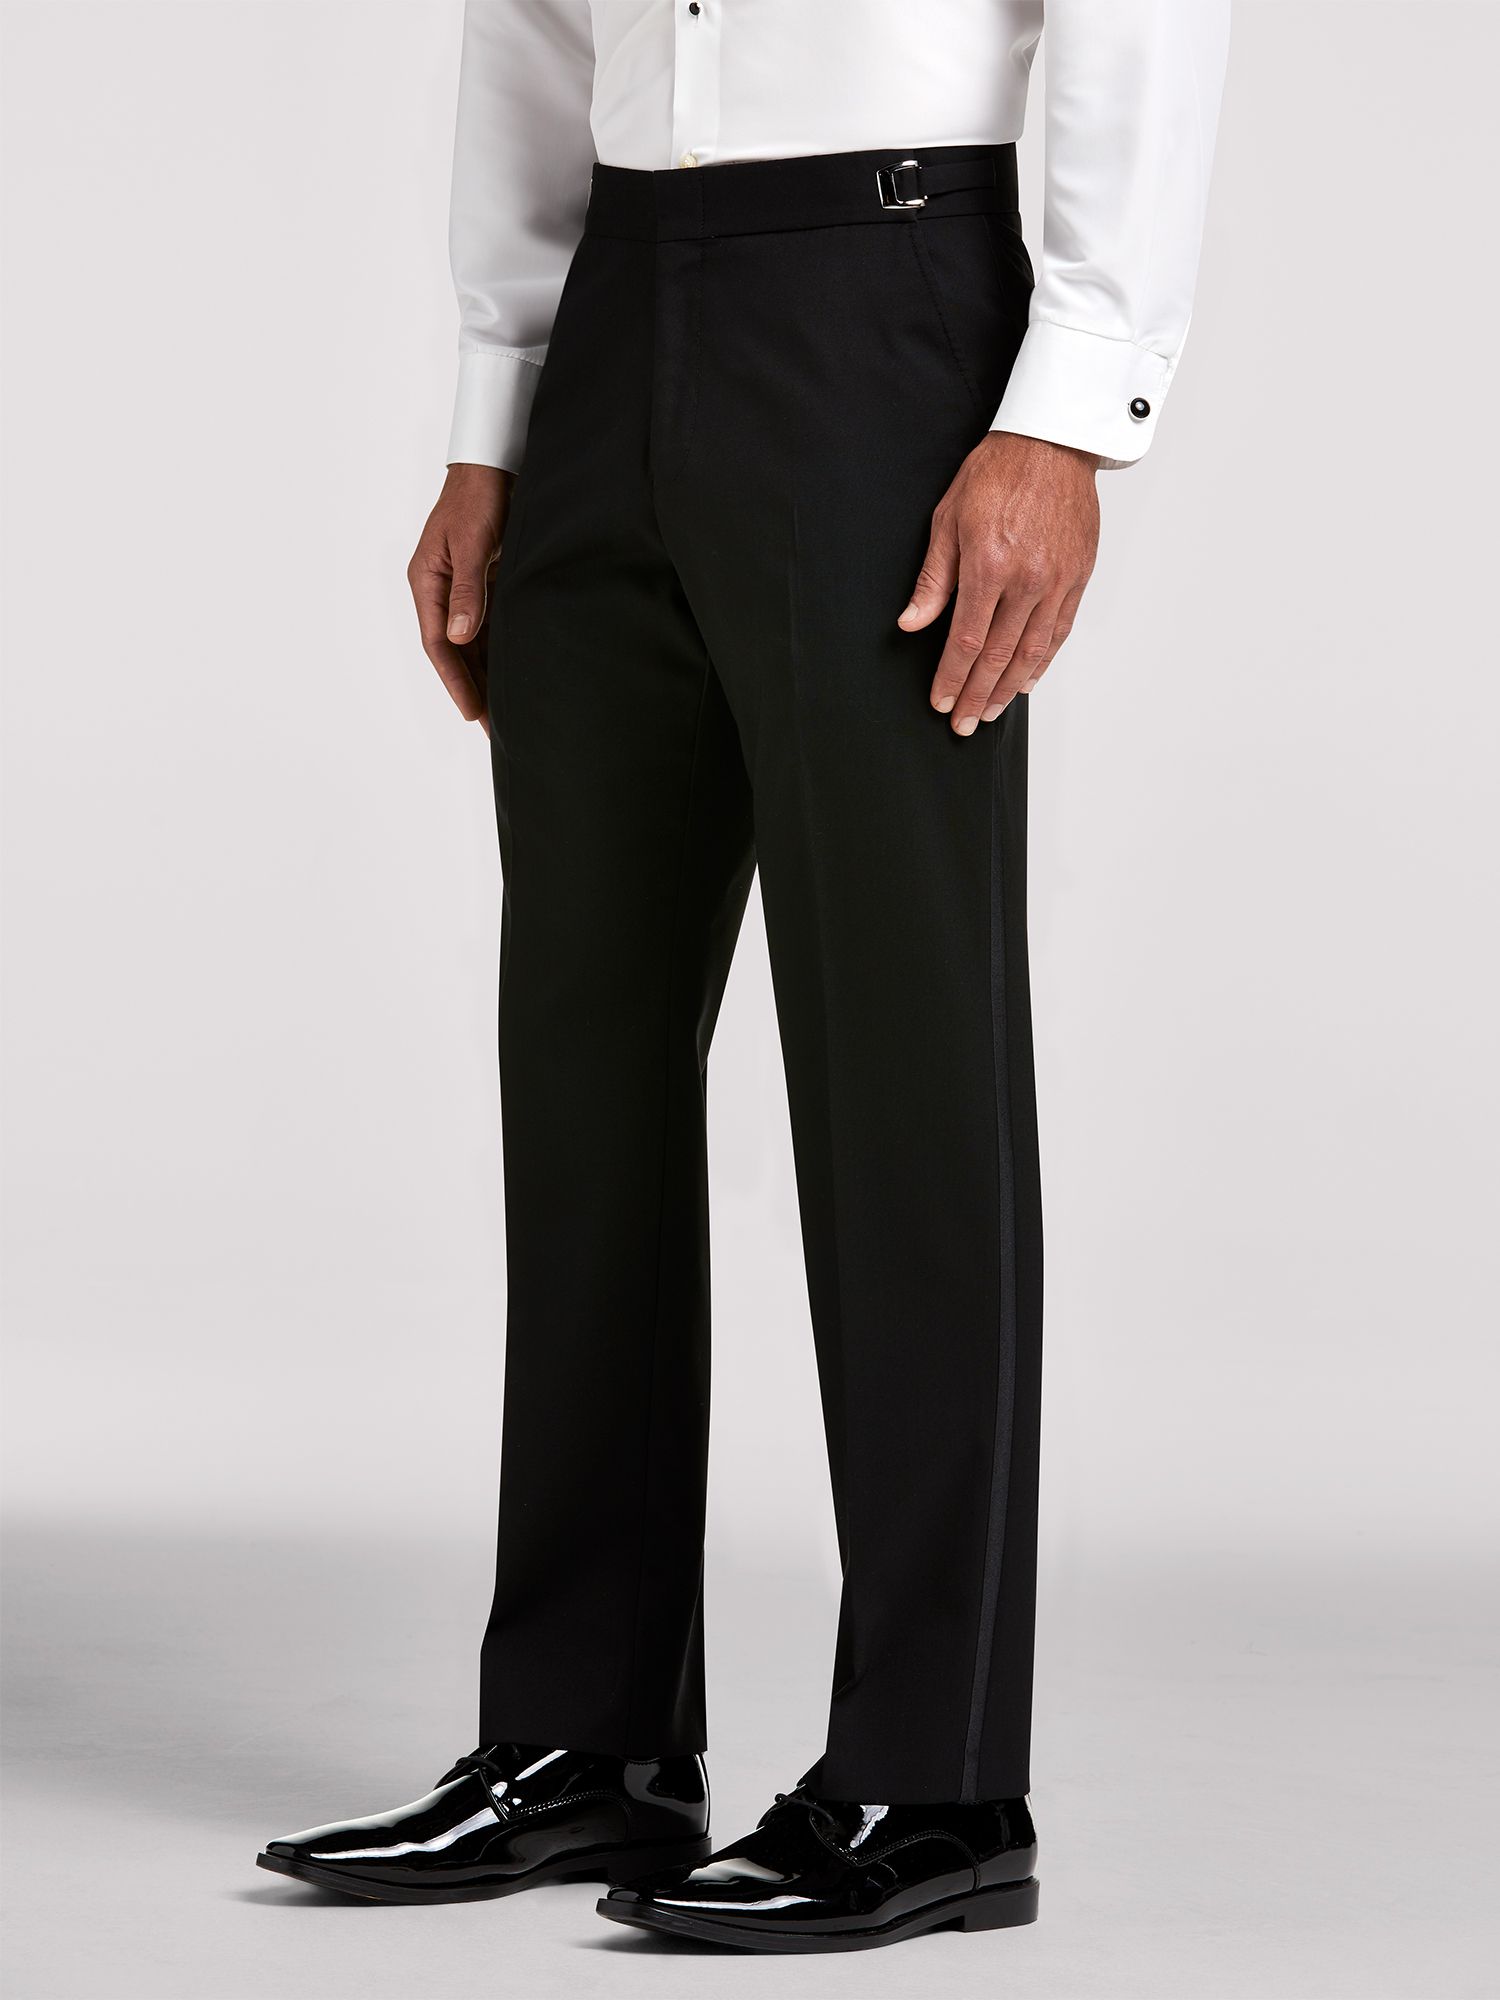 White Dinner Jacket Tux by Joseph & Feiss | Tuxedo Rental | Moores Clothing